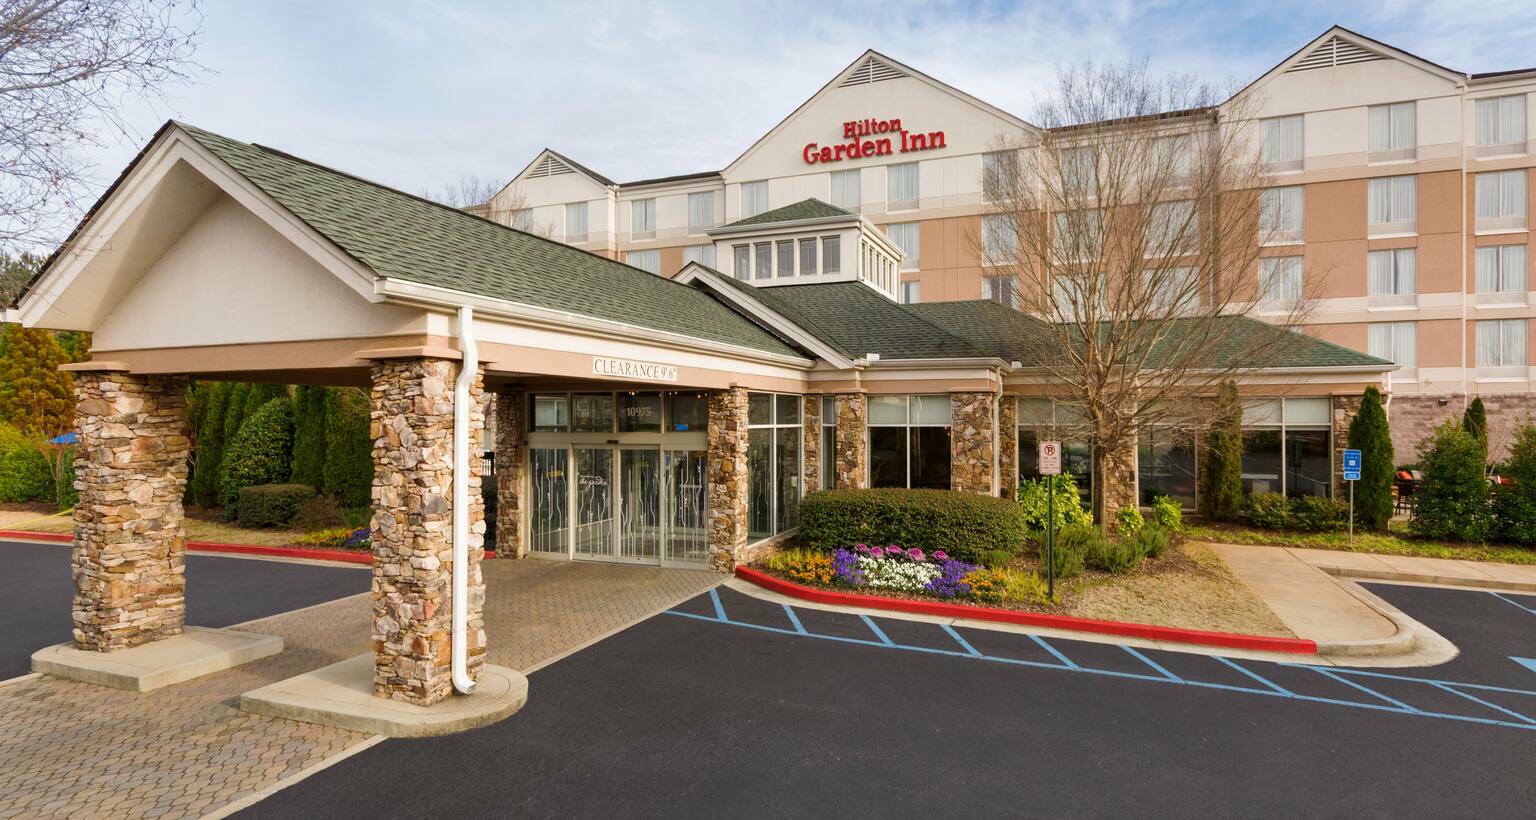 Photo of Hilton Garden Inn Atlanta Northpoint, Alpharetta, GA